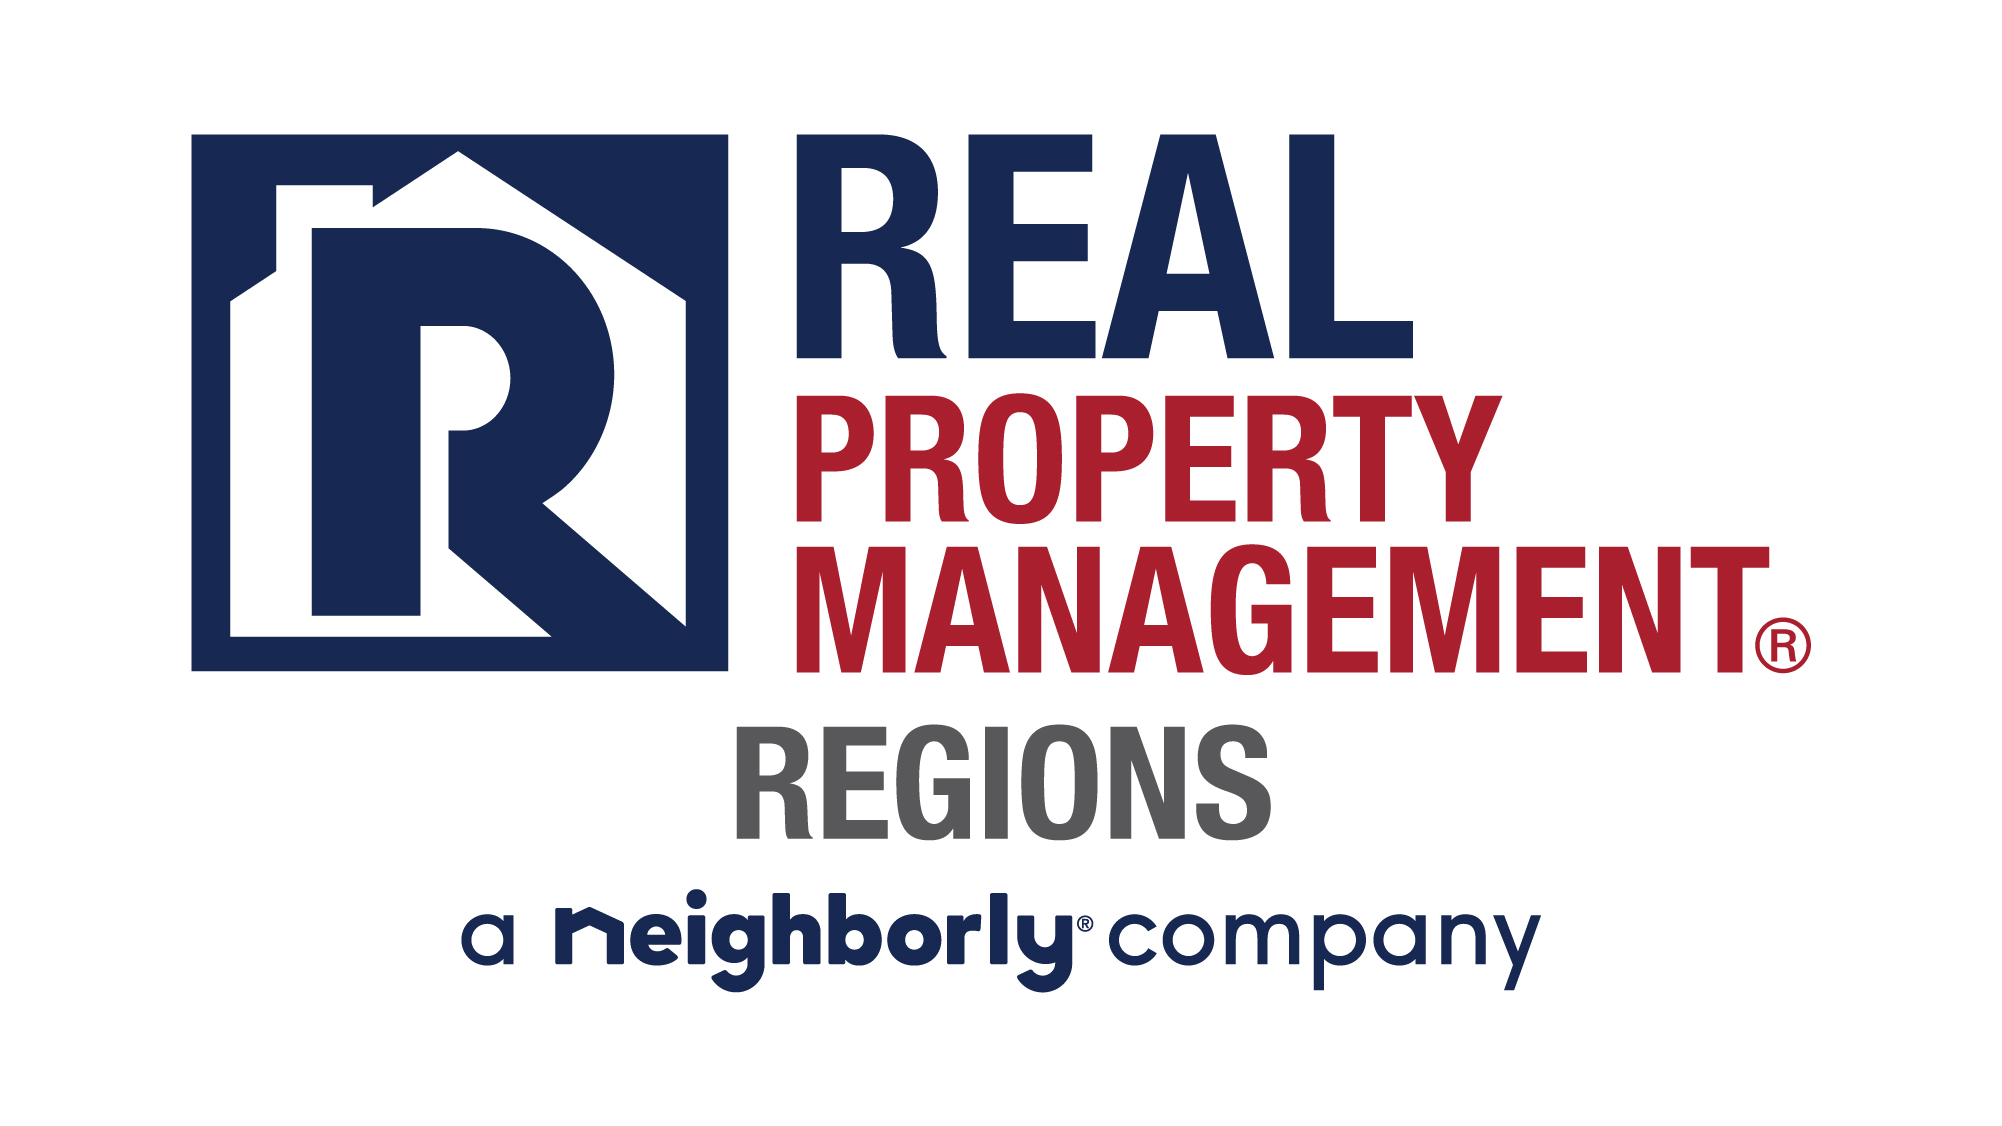 REAL PROPERTY MANAGEMENT REGIONS logo